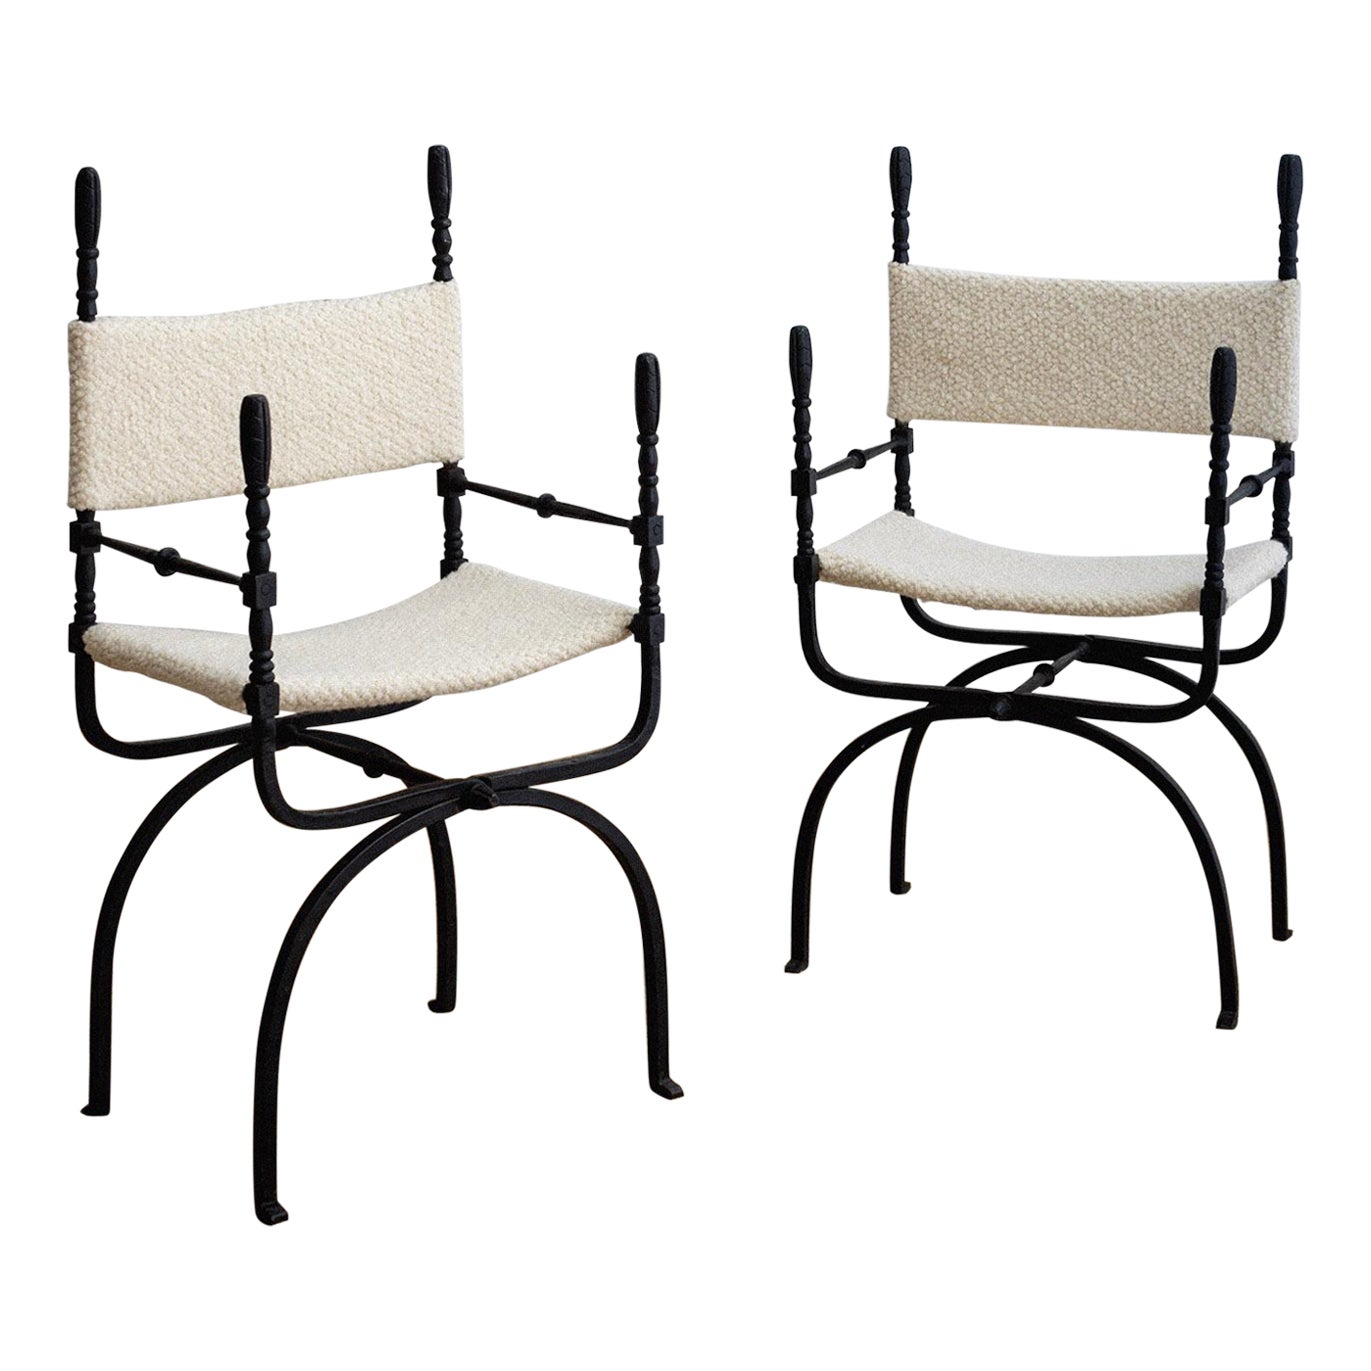 Wrought Iron 'Dagobert' Style Folding Chairs in Bouclé - a Pair